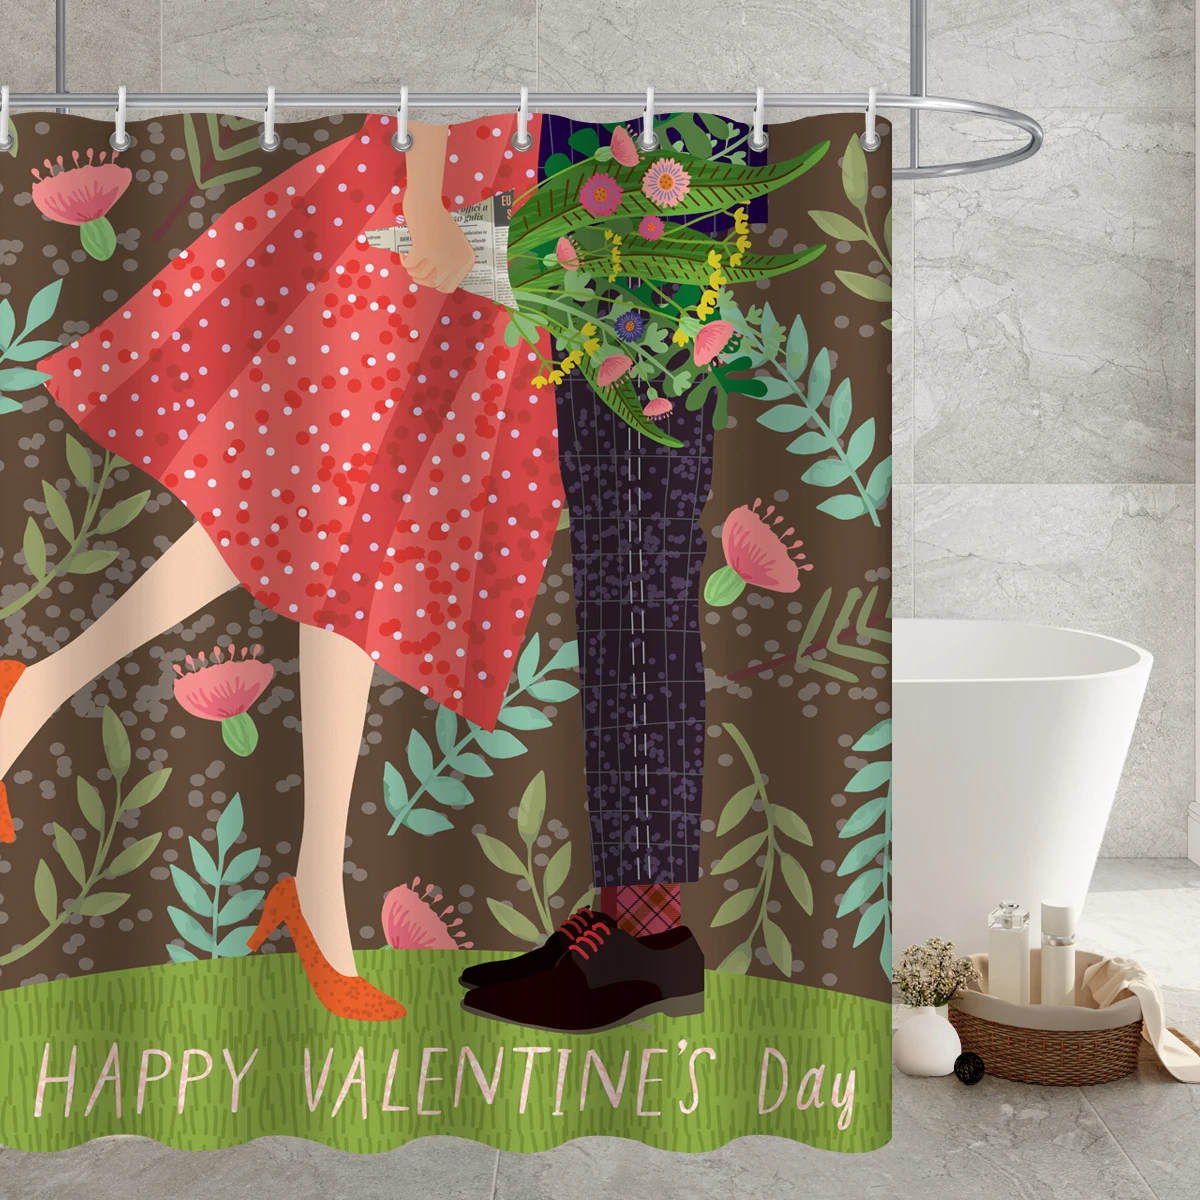 Hearts Shower Curtain, Valentines Day Falling Red Hearts Shower Curtains For Bathroom, Heart Cloth Fabric Bathroom Decor Set